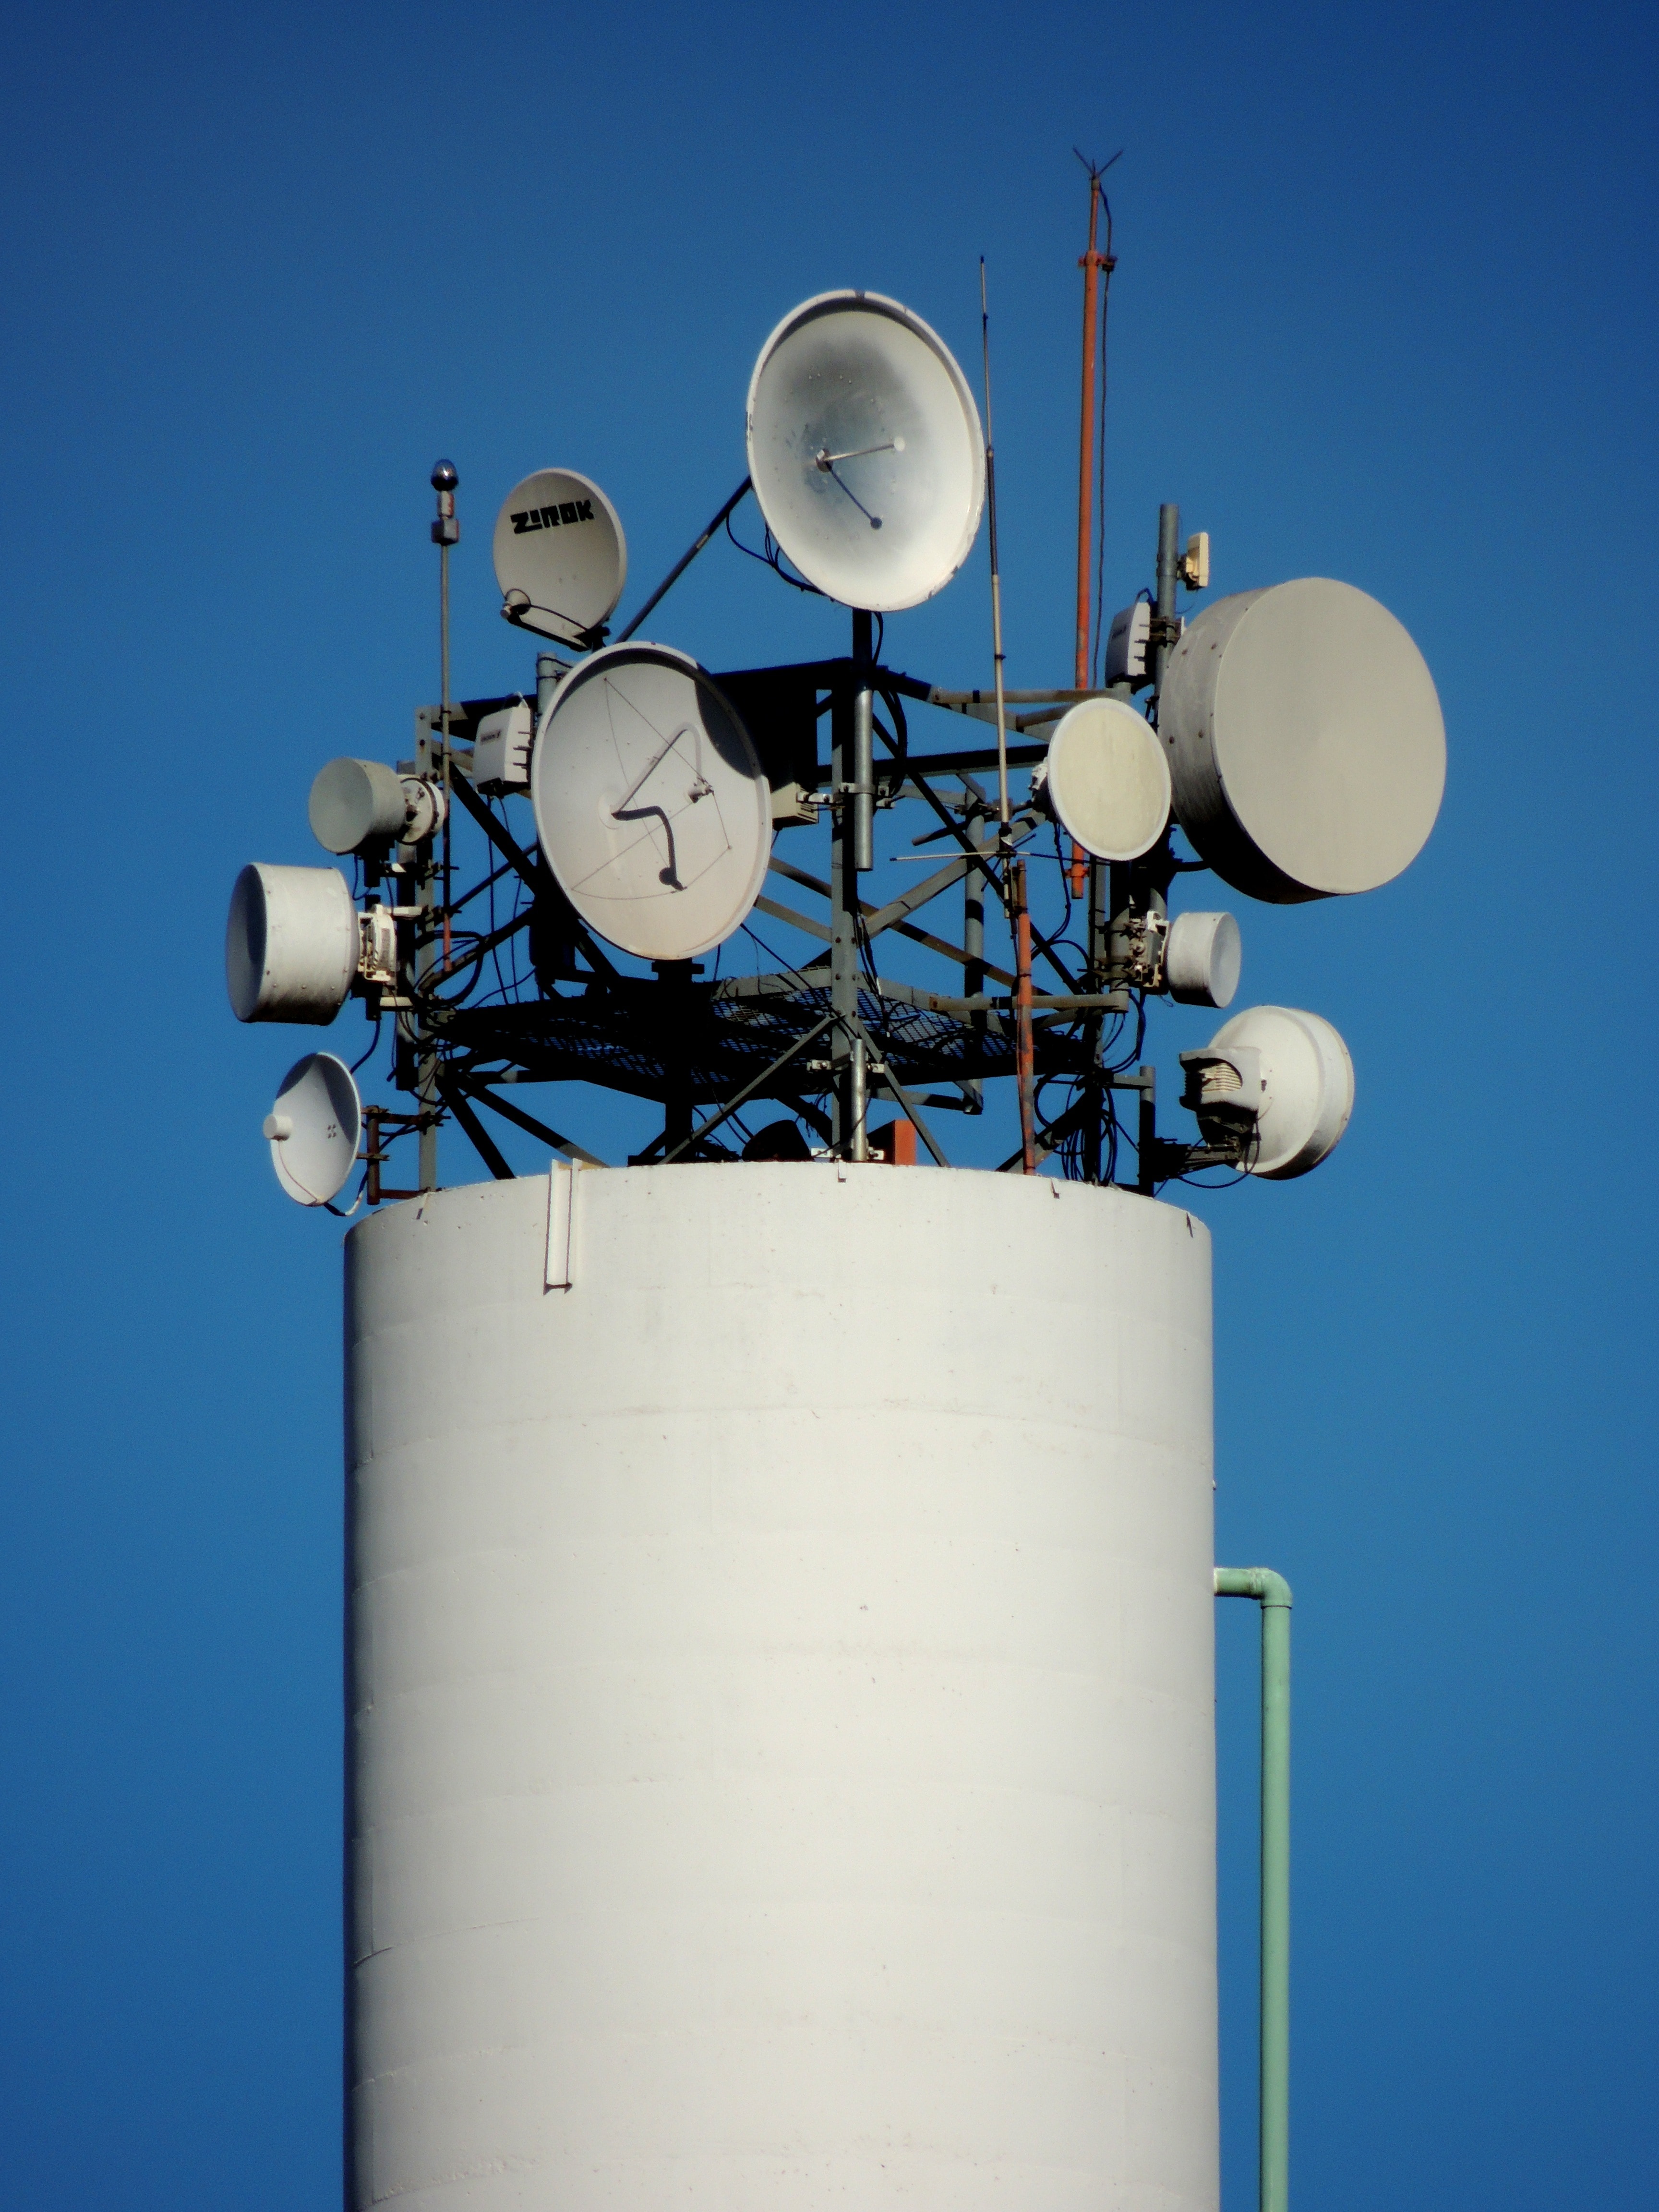 Antennas, Antenna, Visual Pollution, blue, music